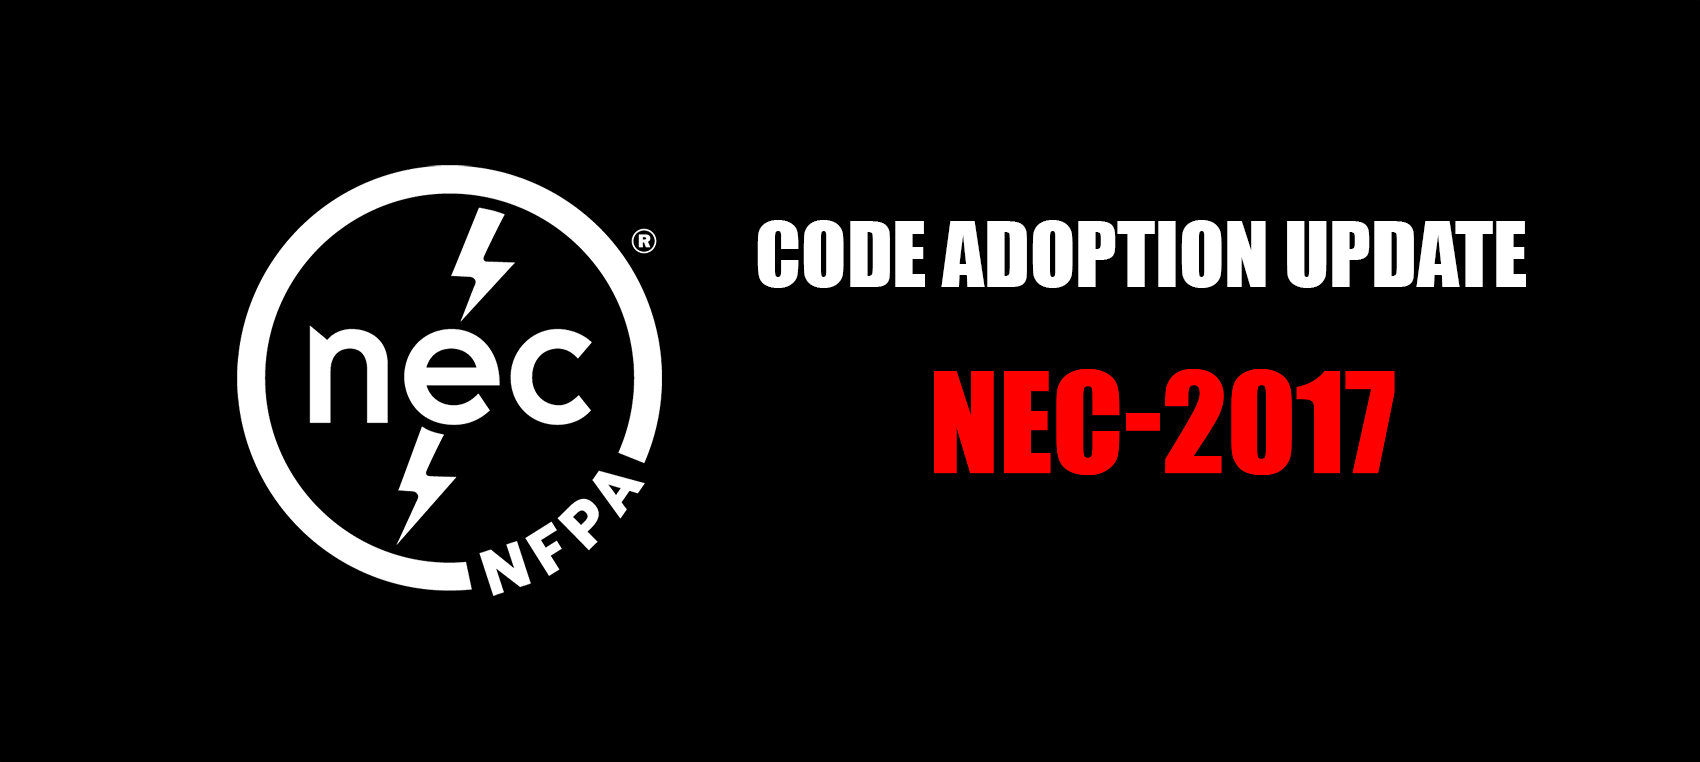 Adoptions of the 2017 NEC